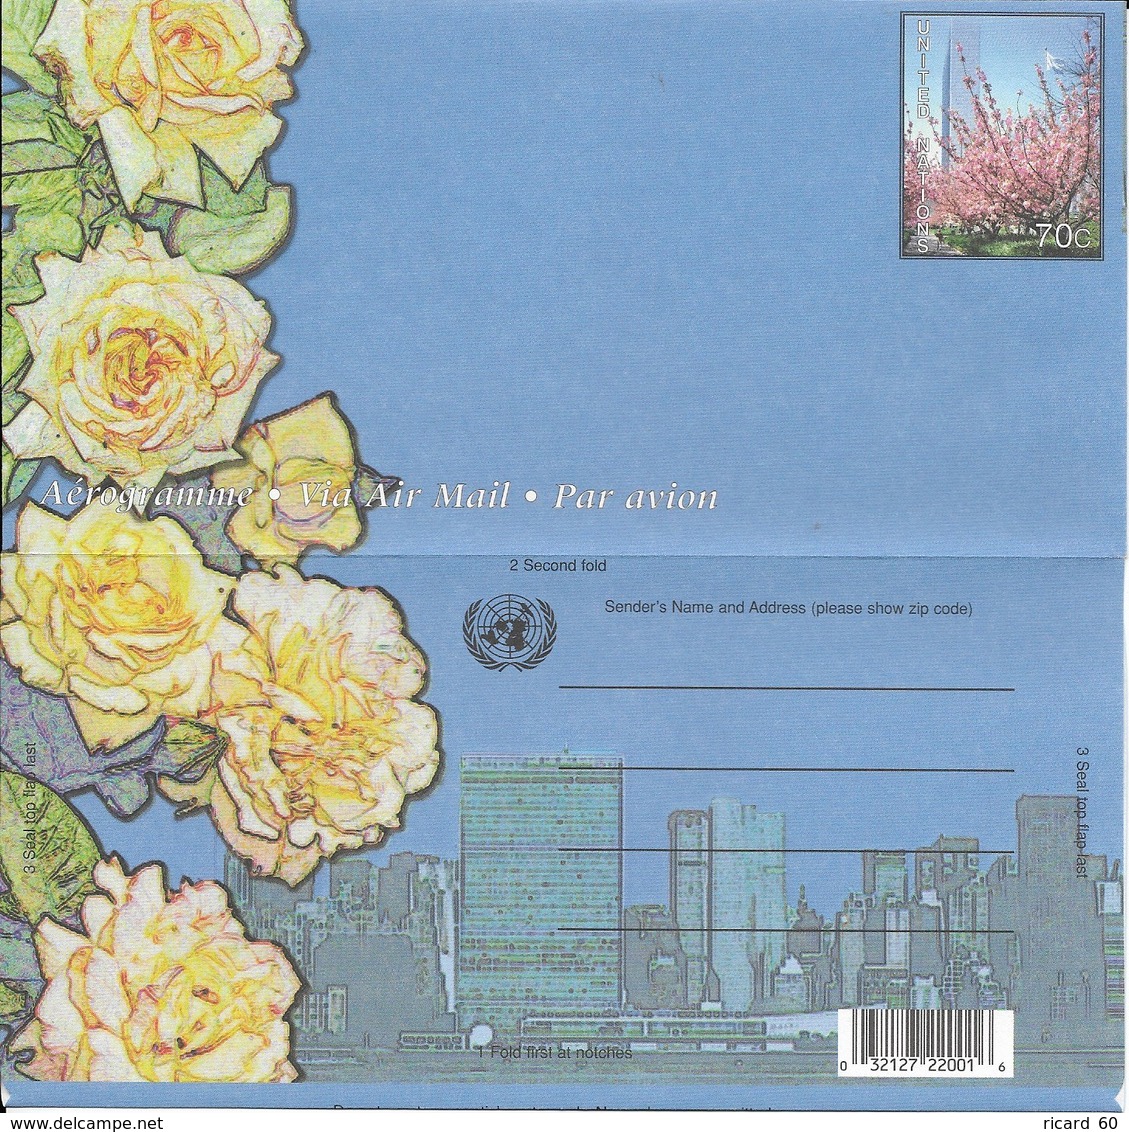 Onu, United Nations, Nations Unies,new York, Entier Postal 2001 , Aérogramme Neuf, Rose Jaune, Cerisiers En Fleurs - Lettres & Documents